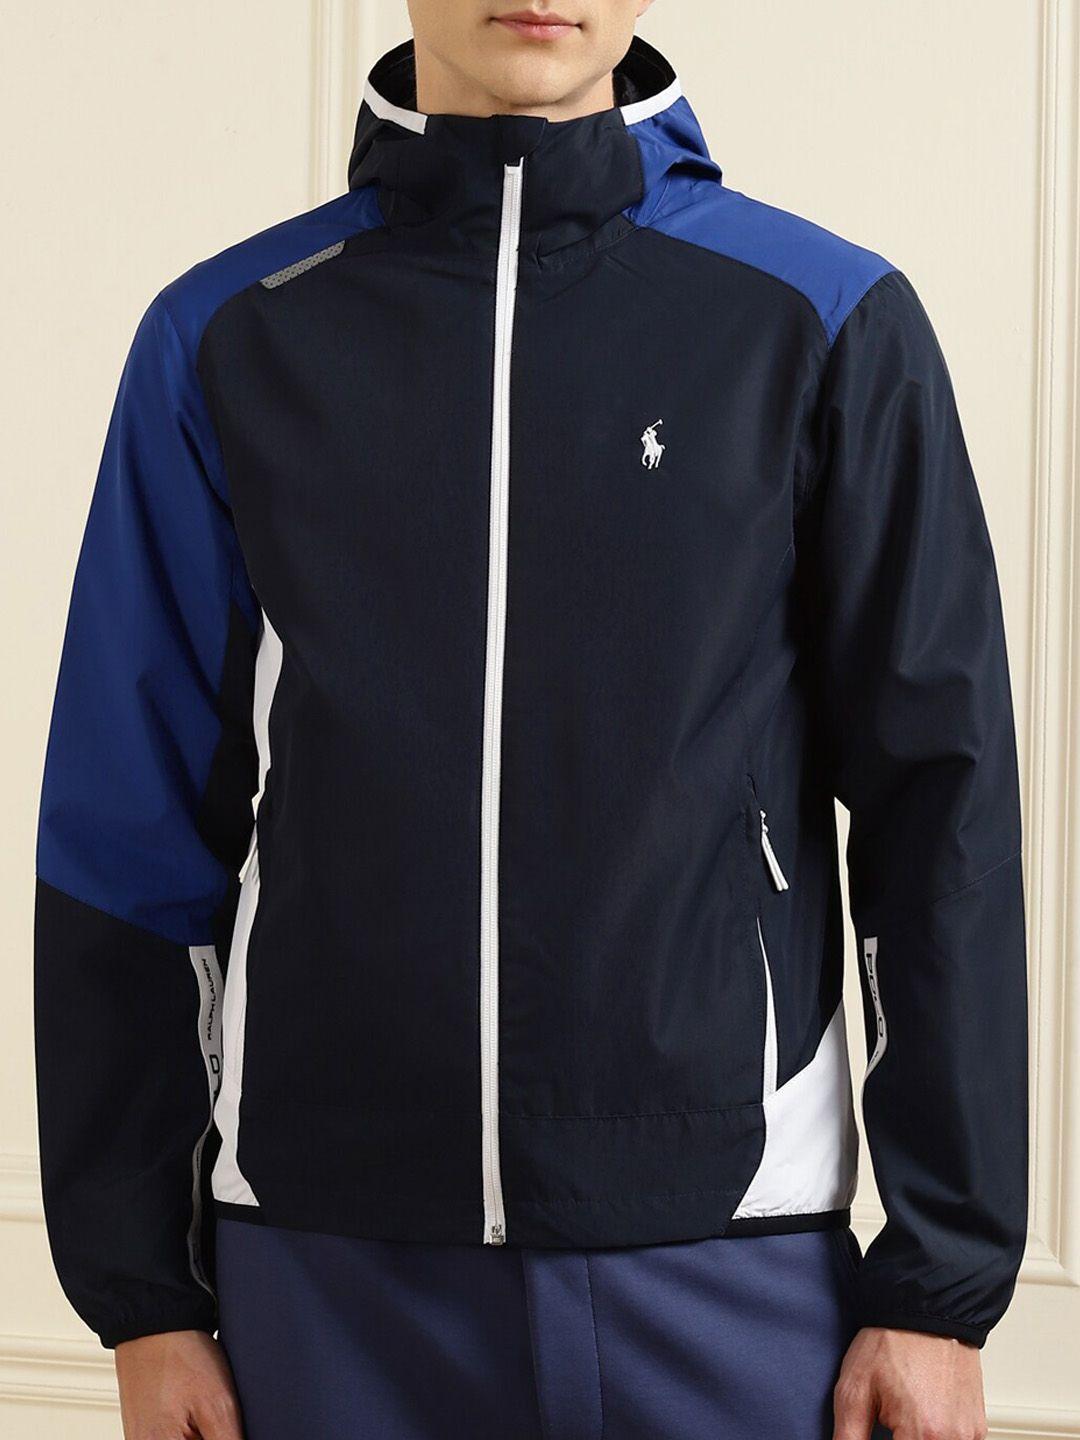 polo ralph lauren men navy blue colourblocked lightweight outdoor sporty jacket